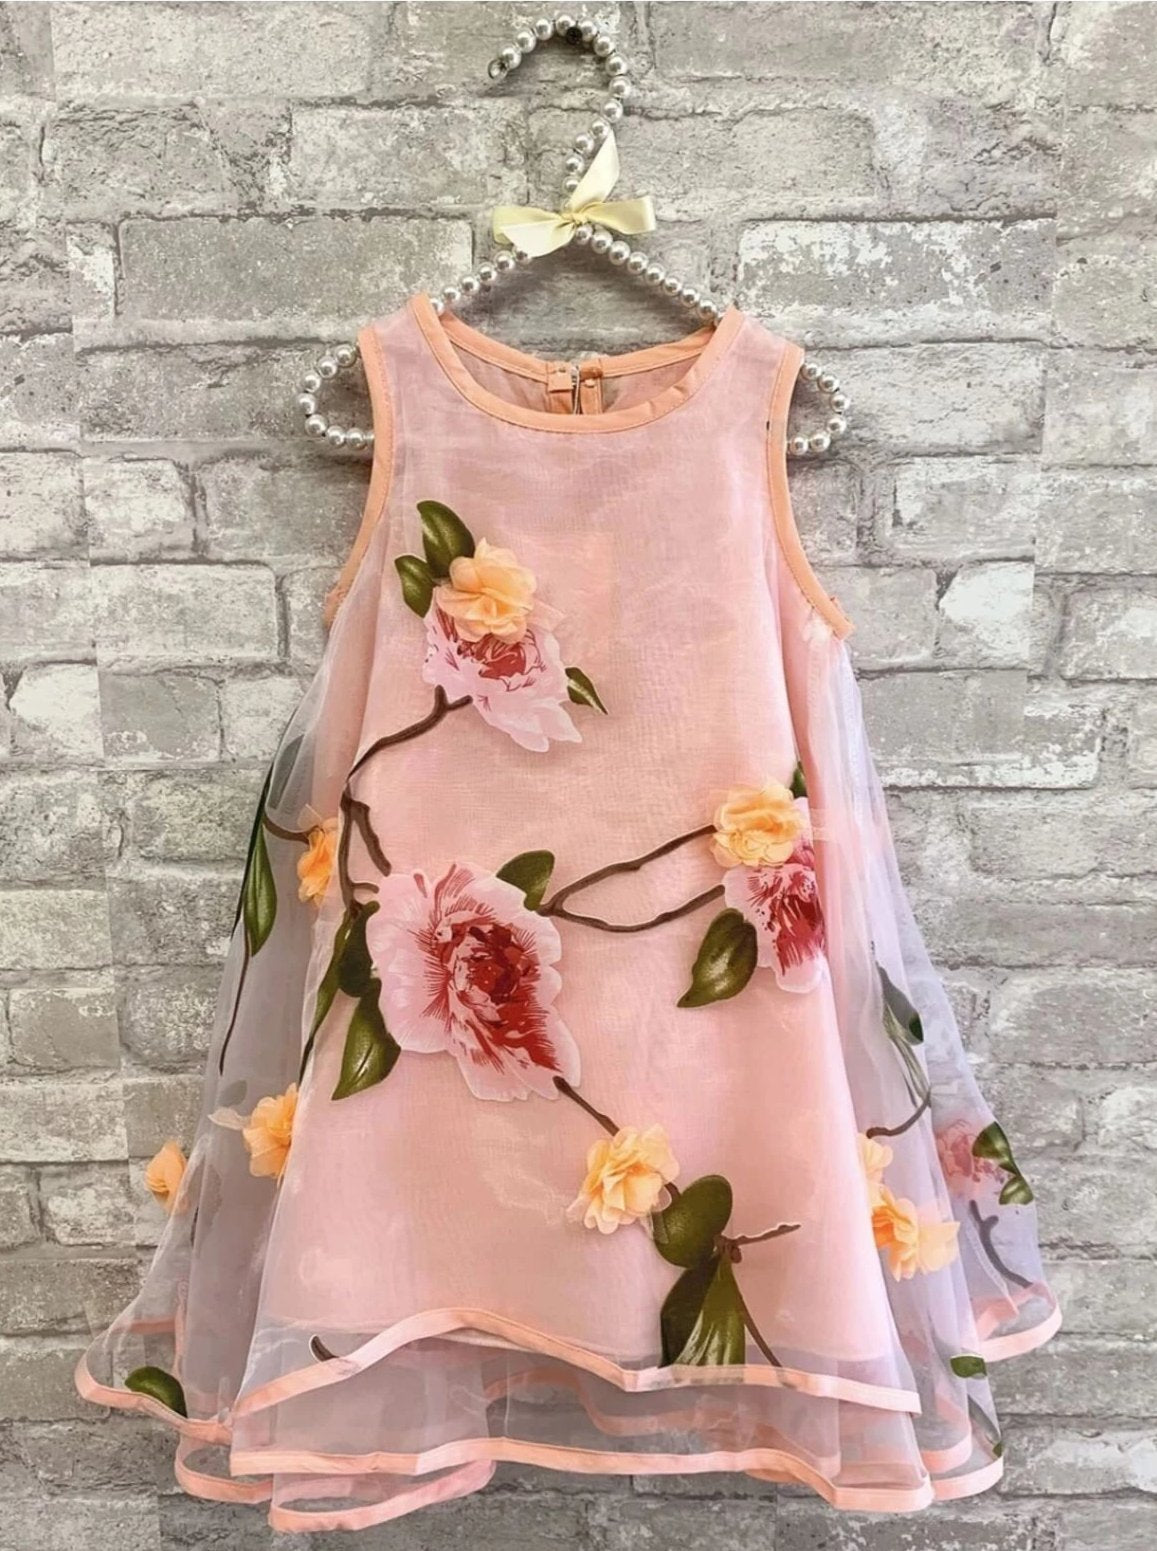 Girls Flower Lace Sleeveless Lush Dress - Pink / 8Y - Girls Spring Dressy Dress